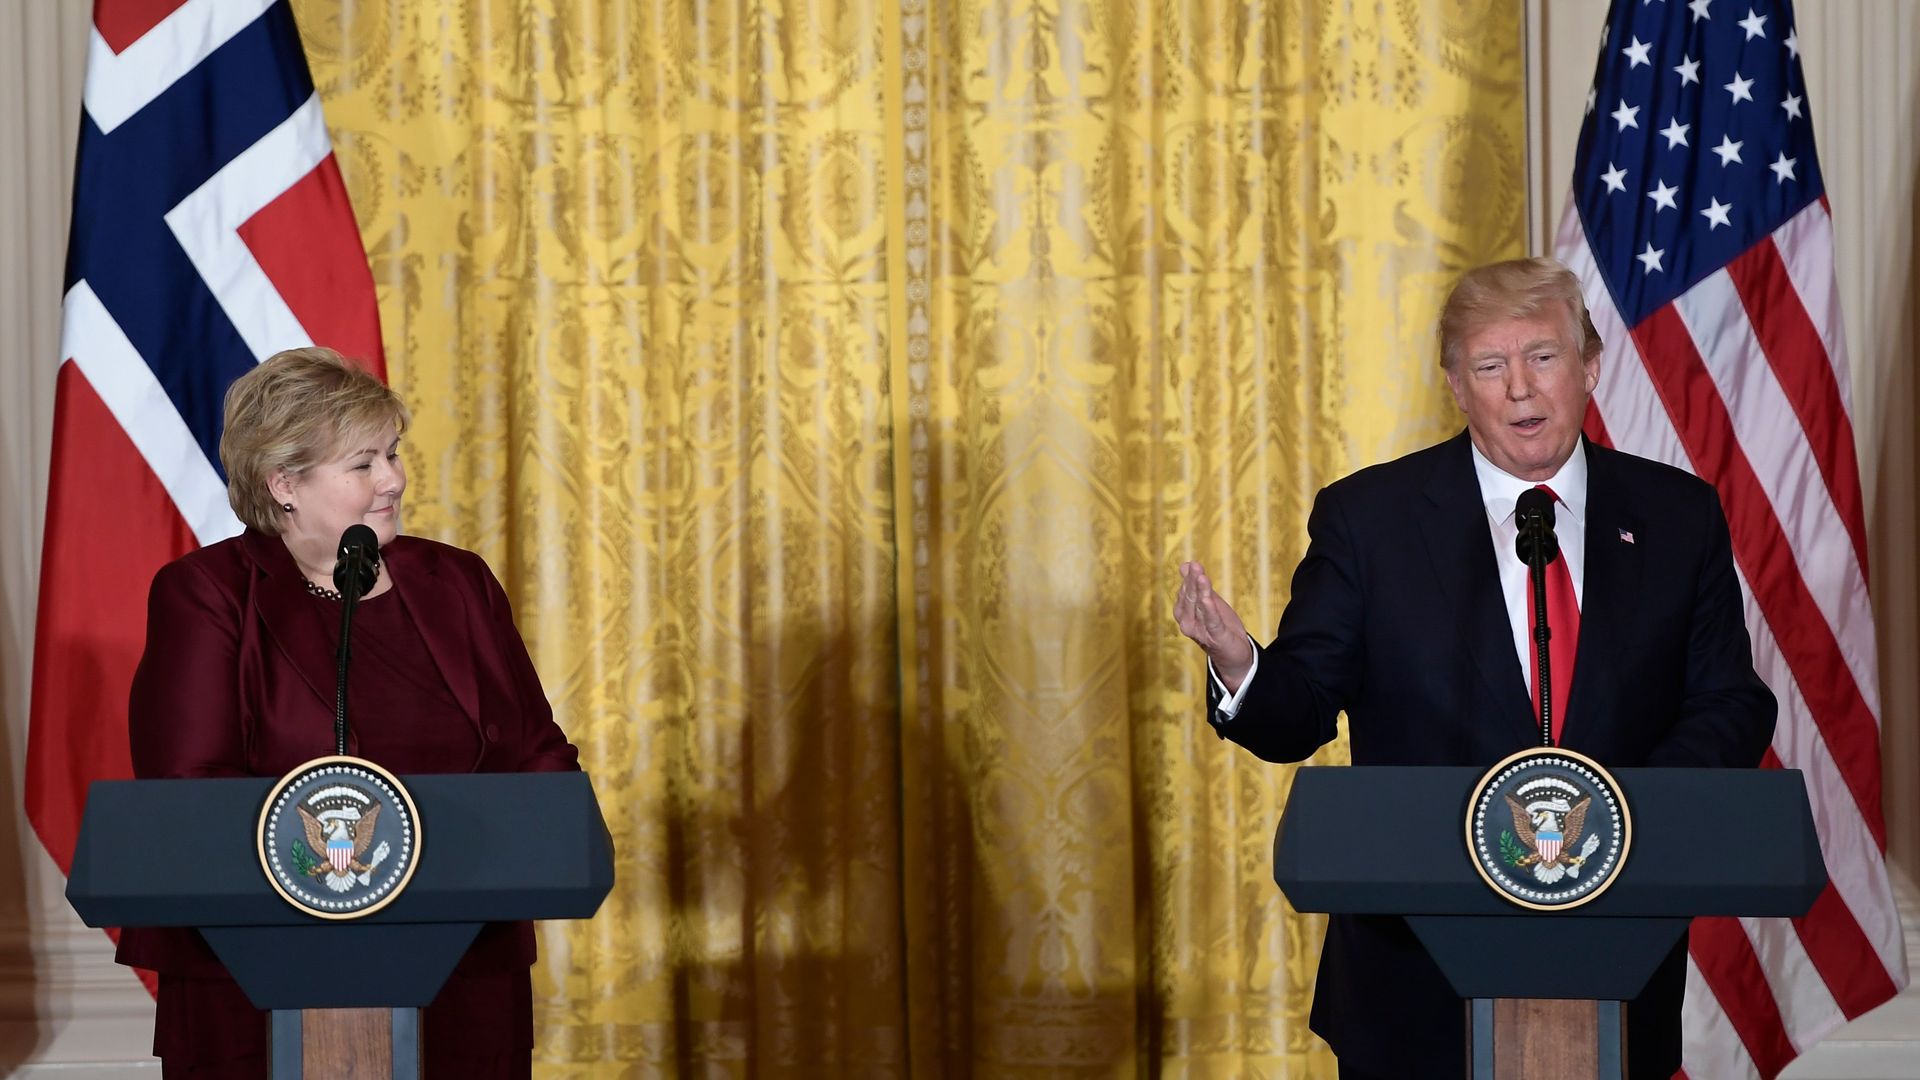 Trump and Erna Solberg